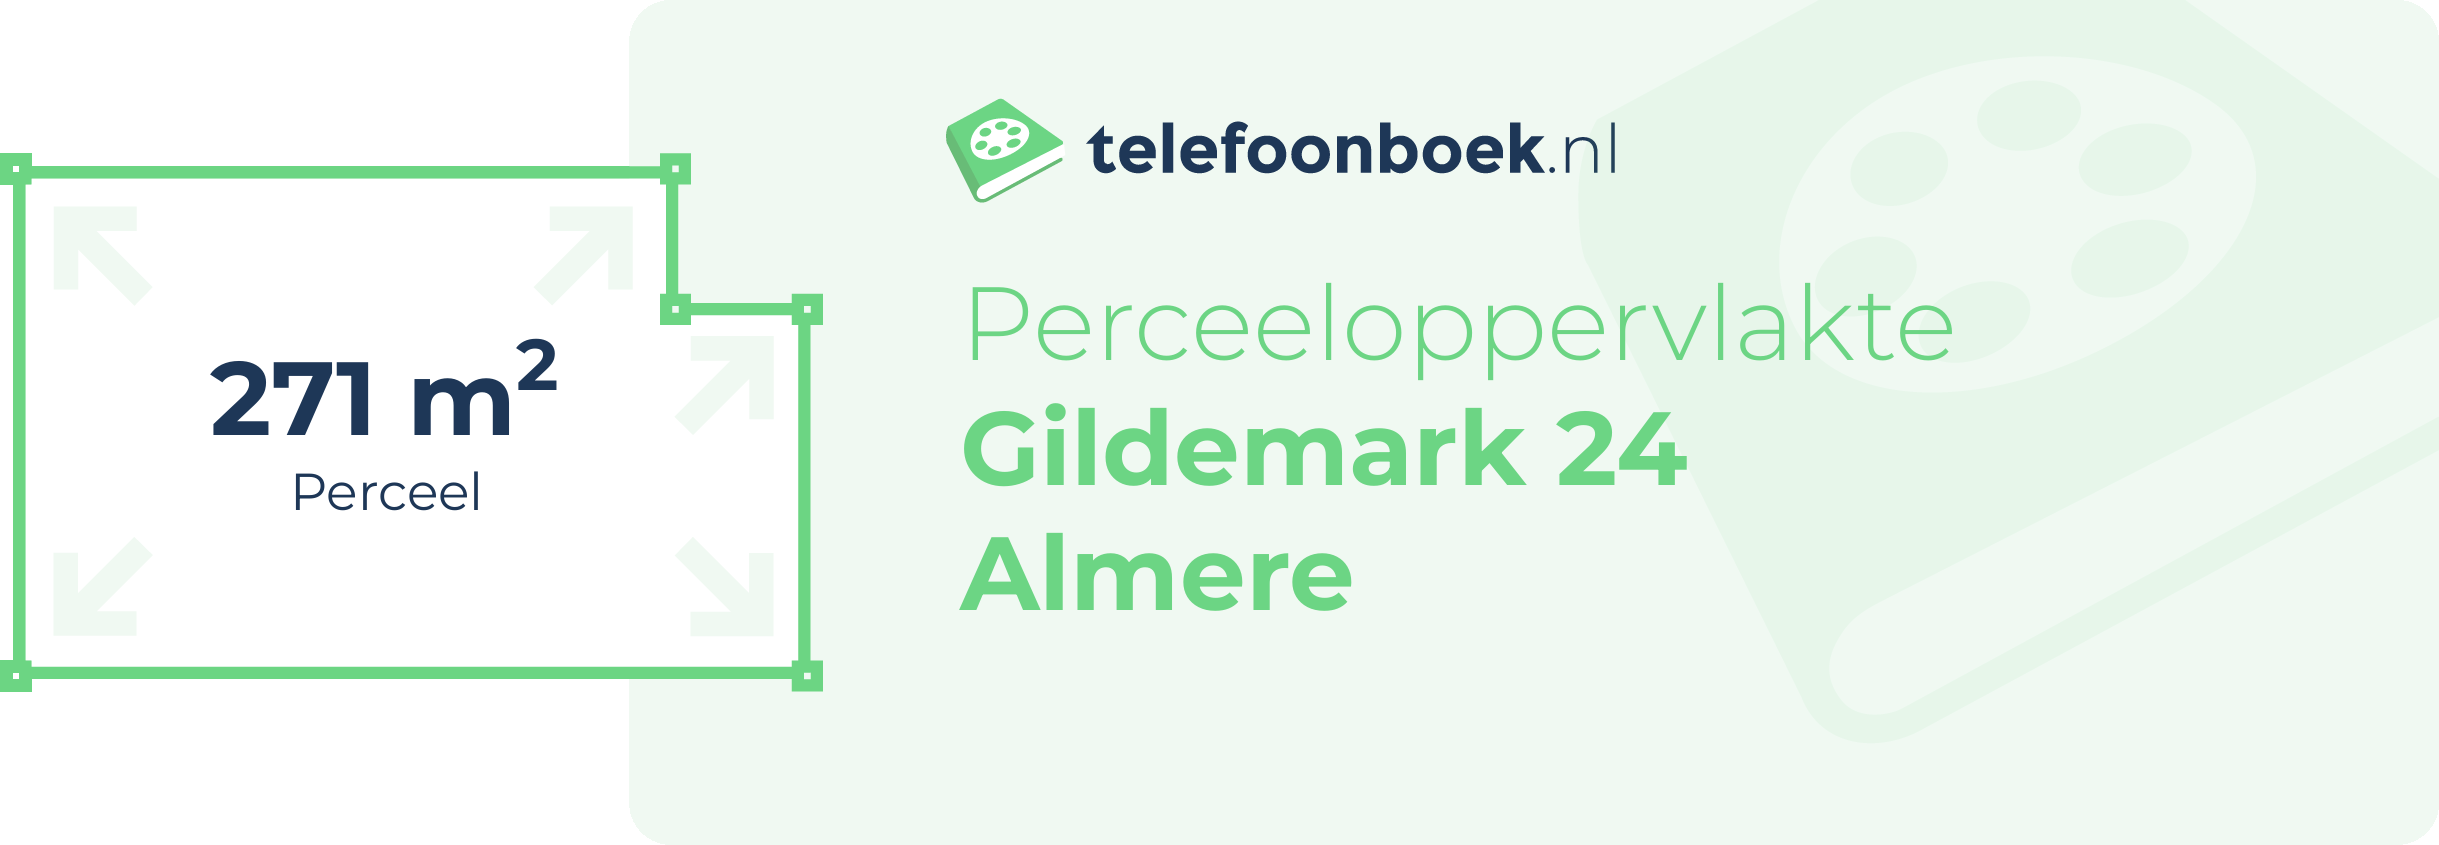 Perceeloppervlakte Gildemark 24 Almere